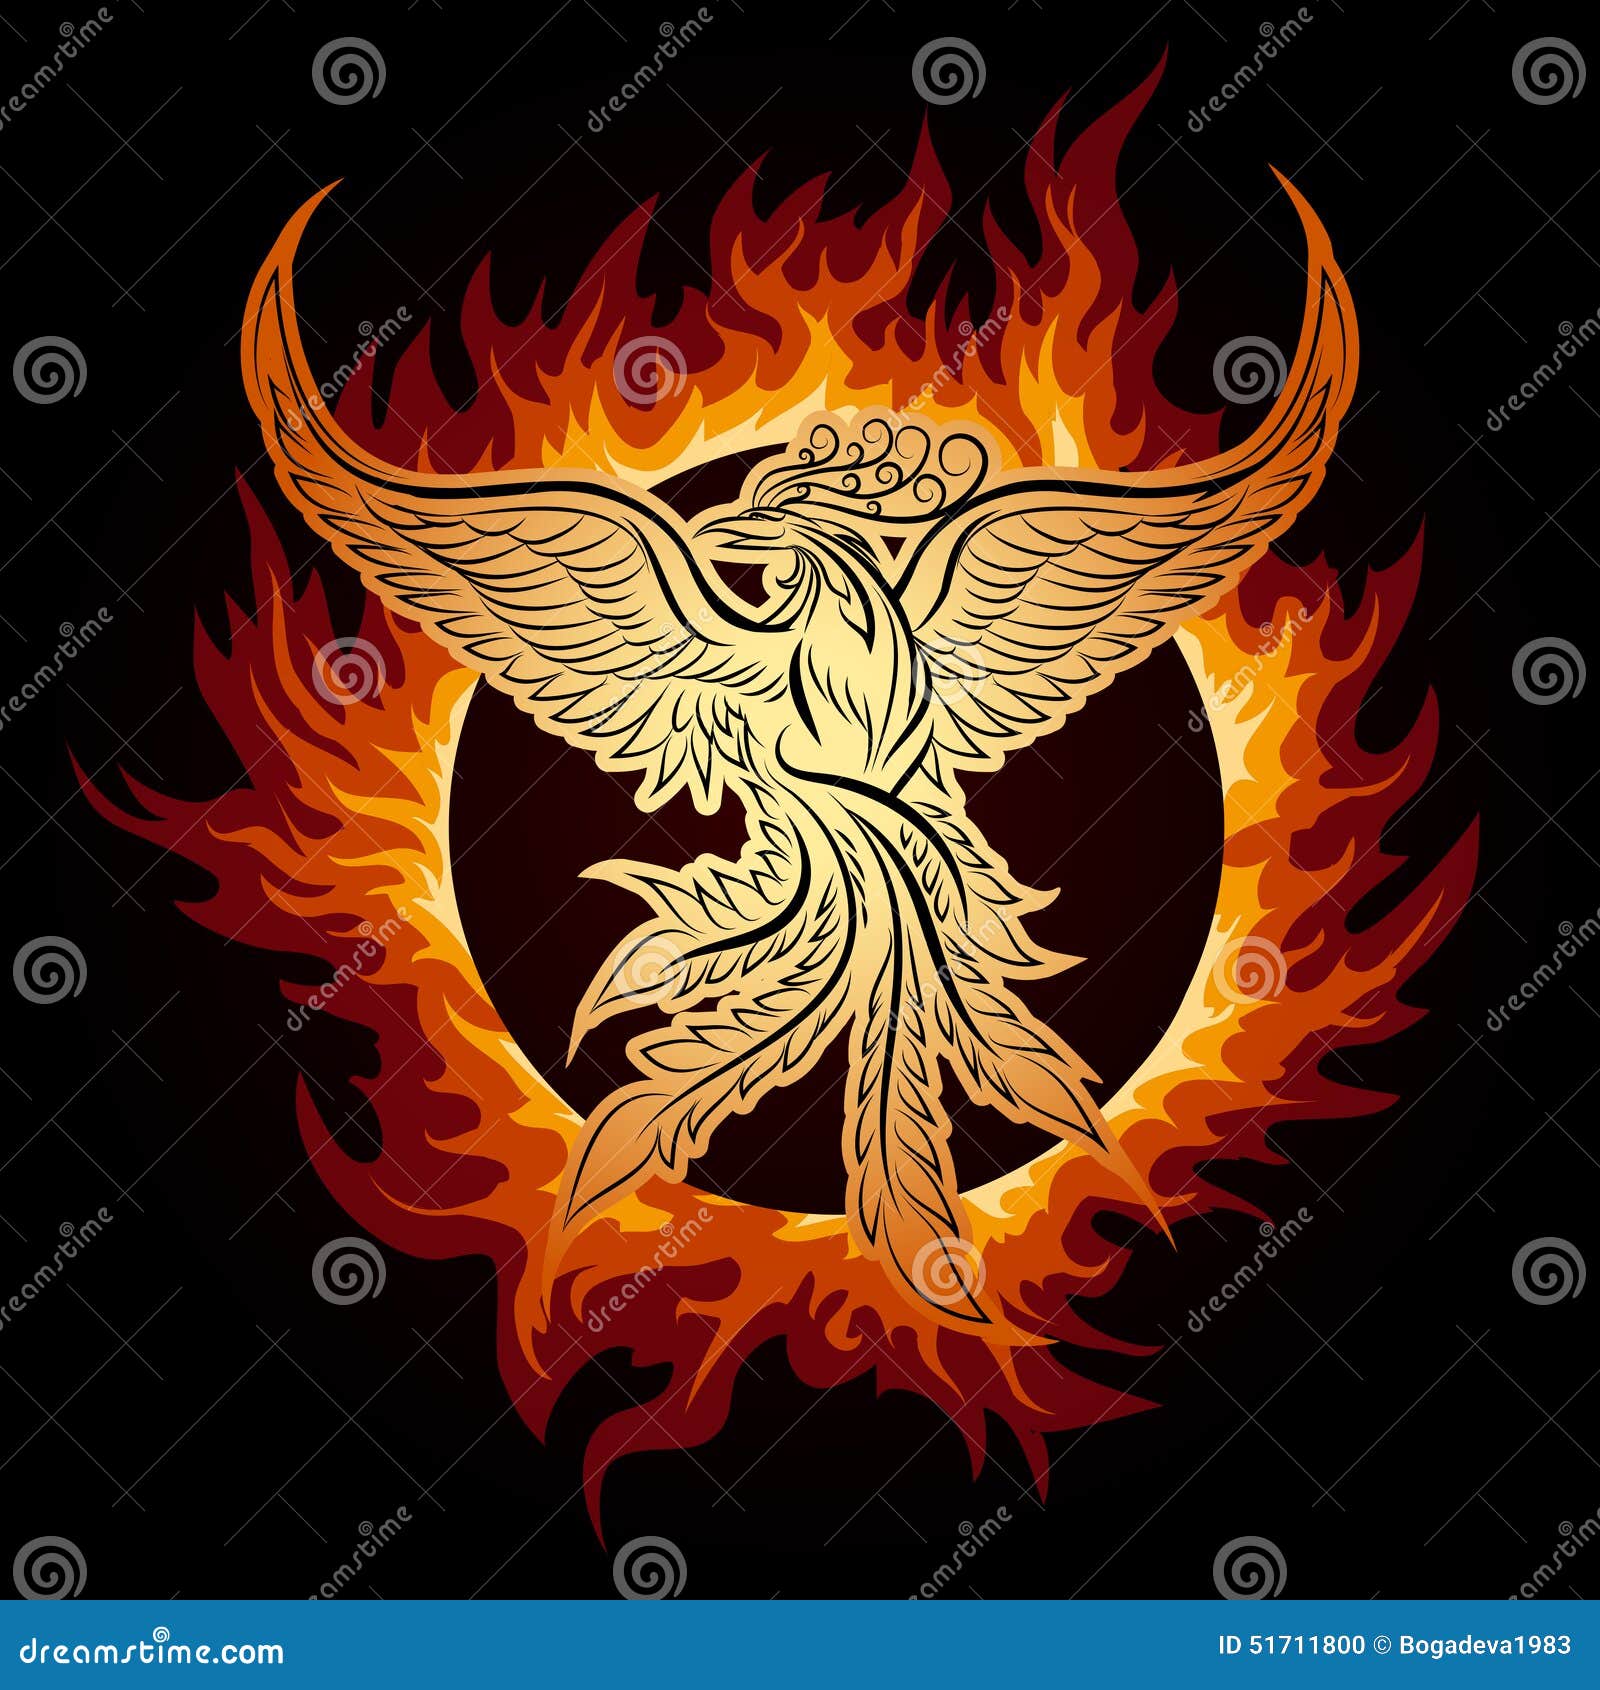 phoenix in flame